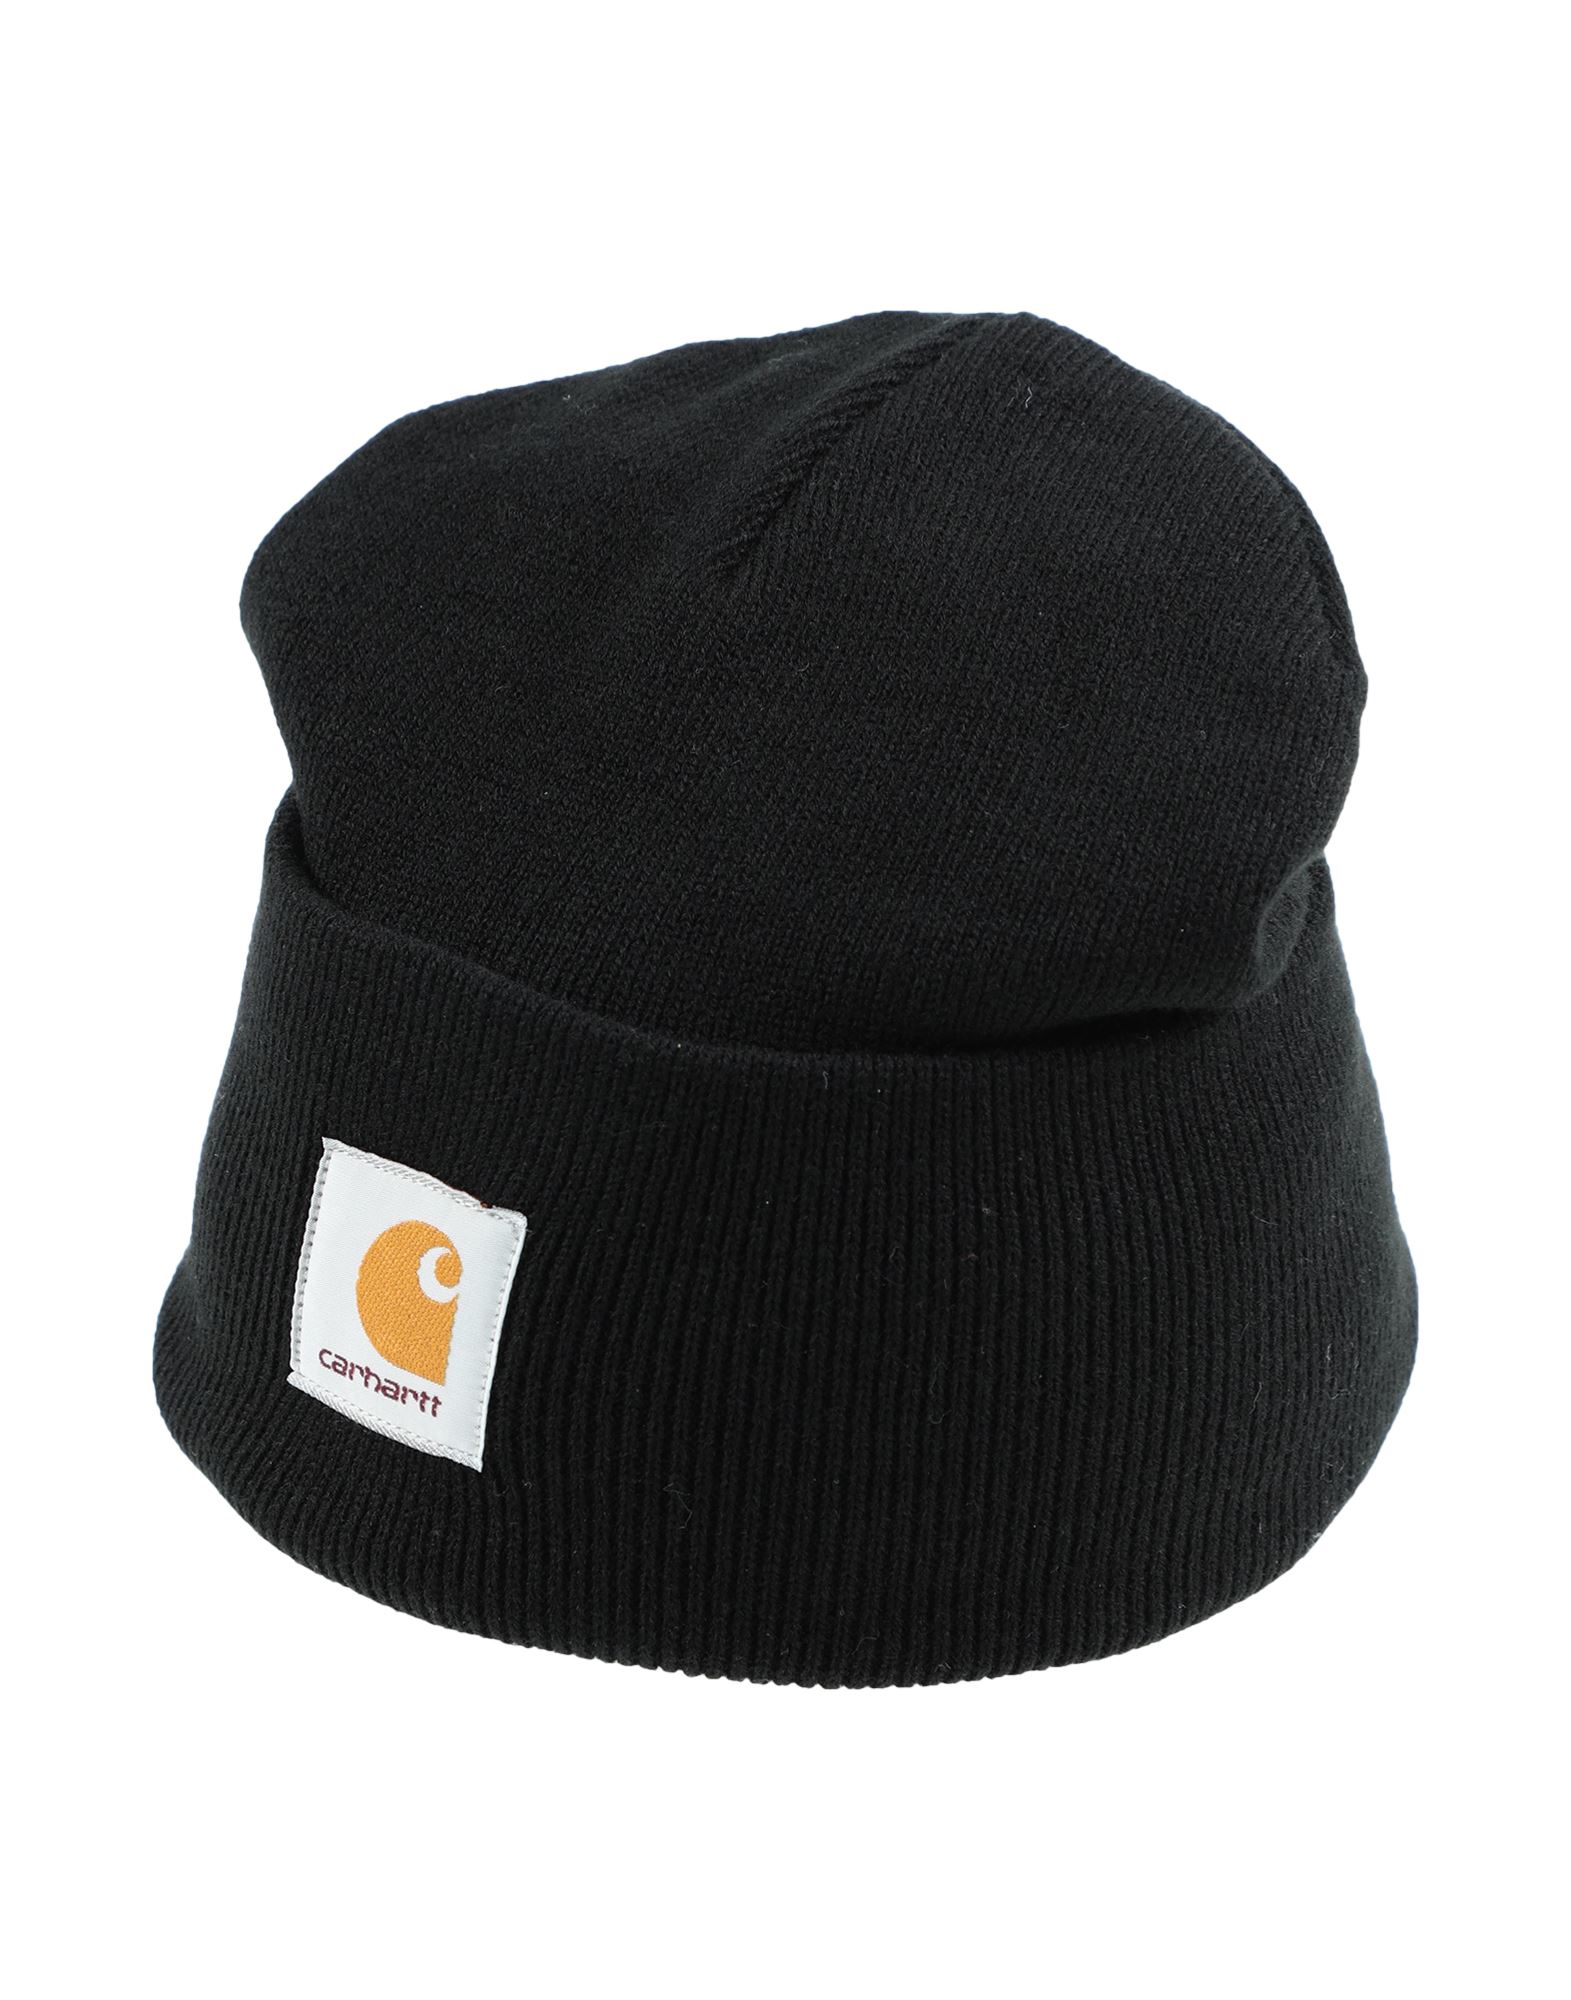 Carhartt Man Hat Black Size Onesize Acrylic